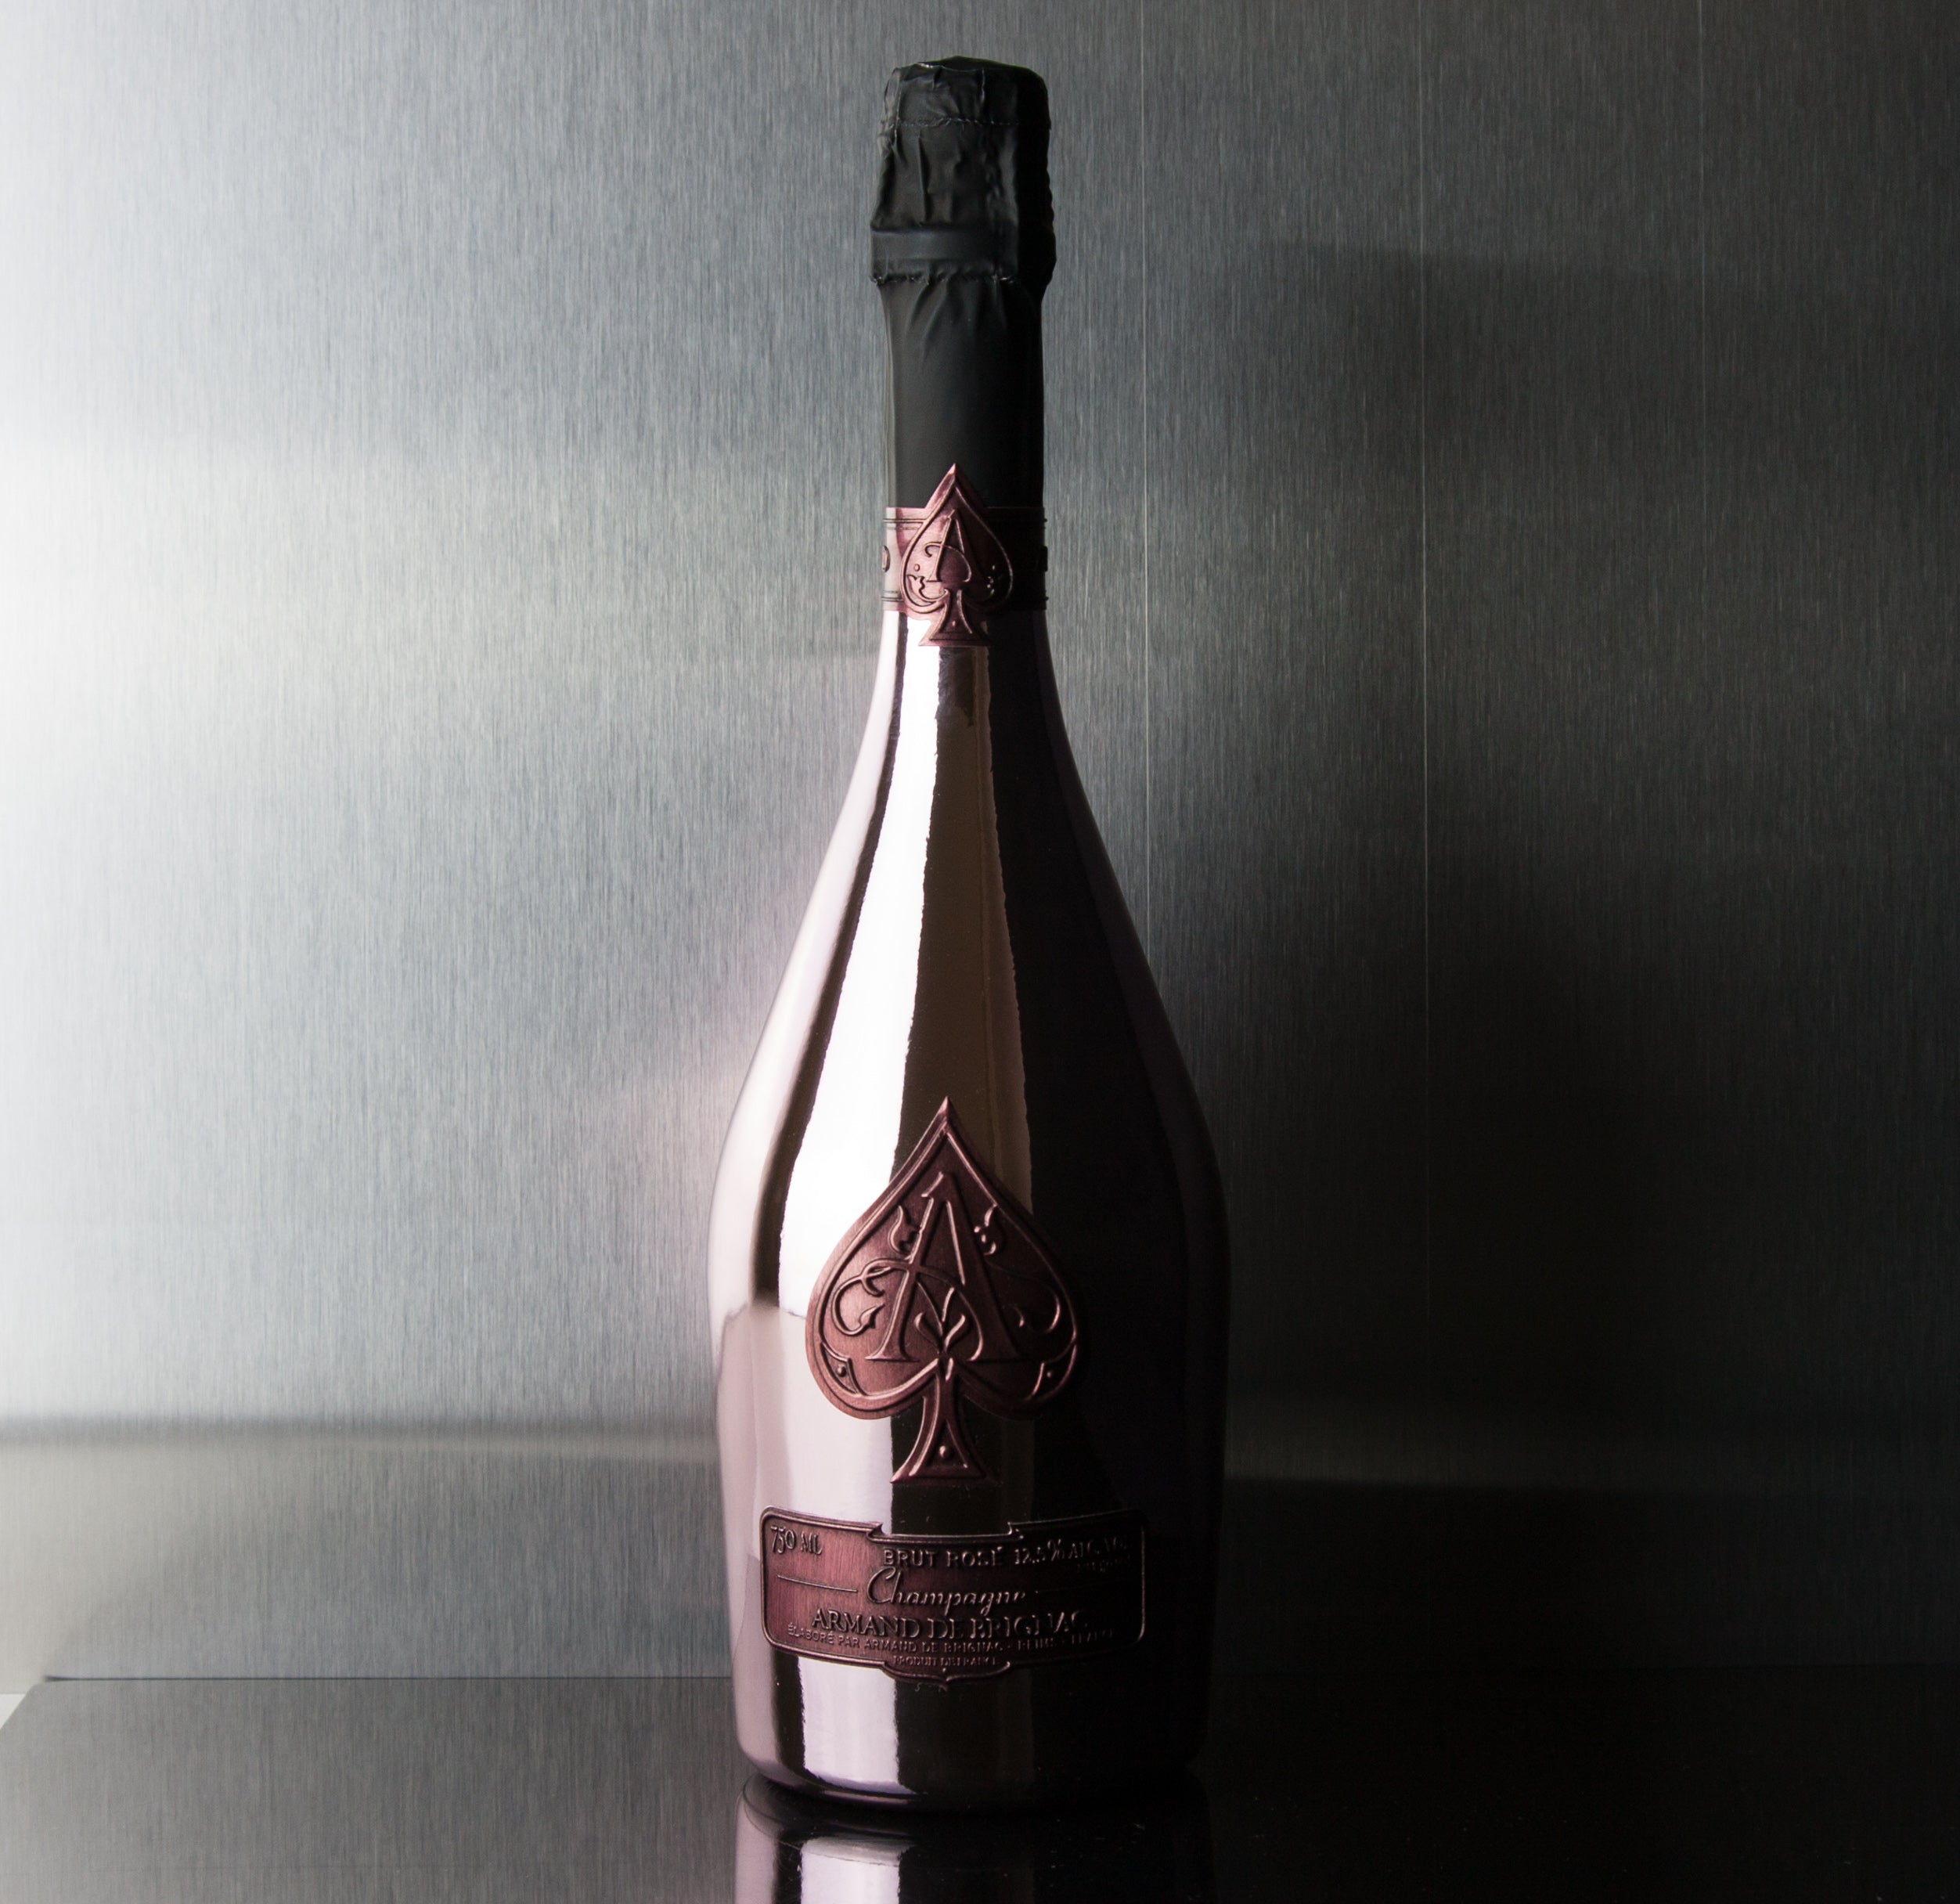 Moët & Chandon, ,Champagne, Nectar Imperial Rose, 750ml – Bourbon